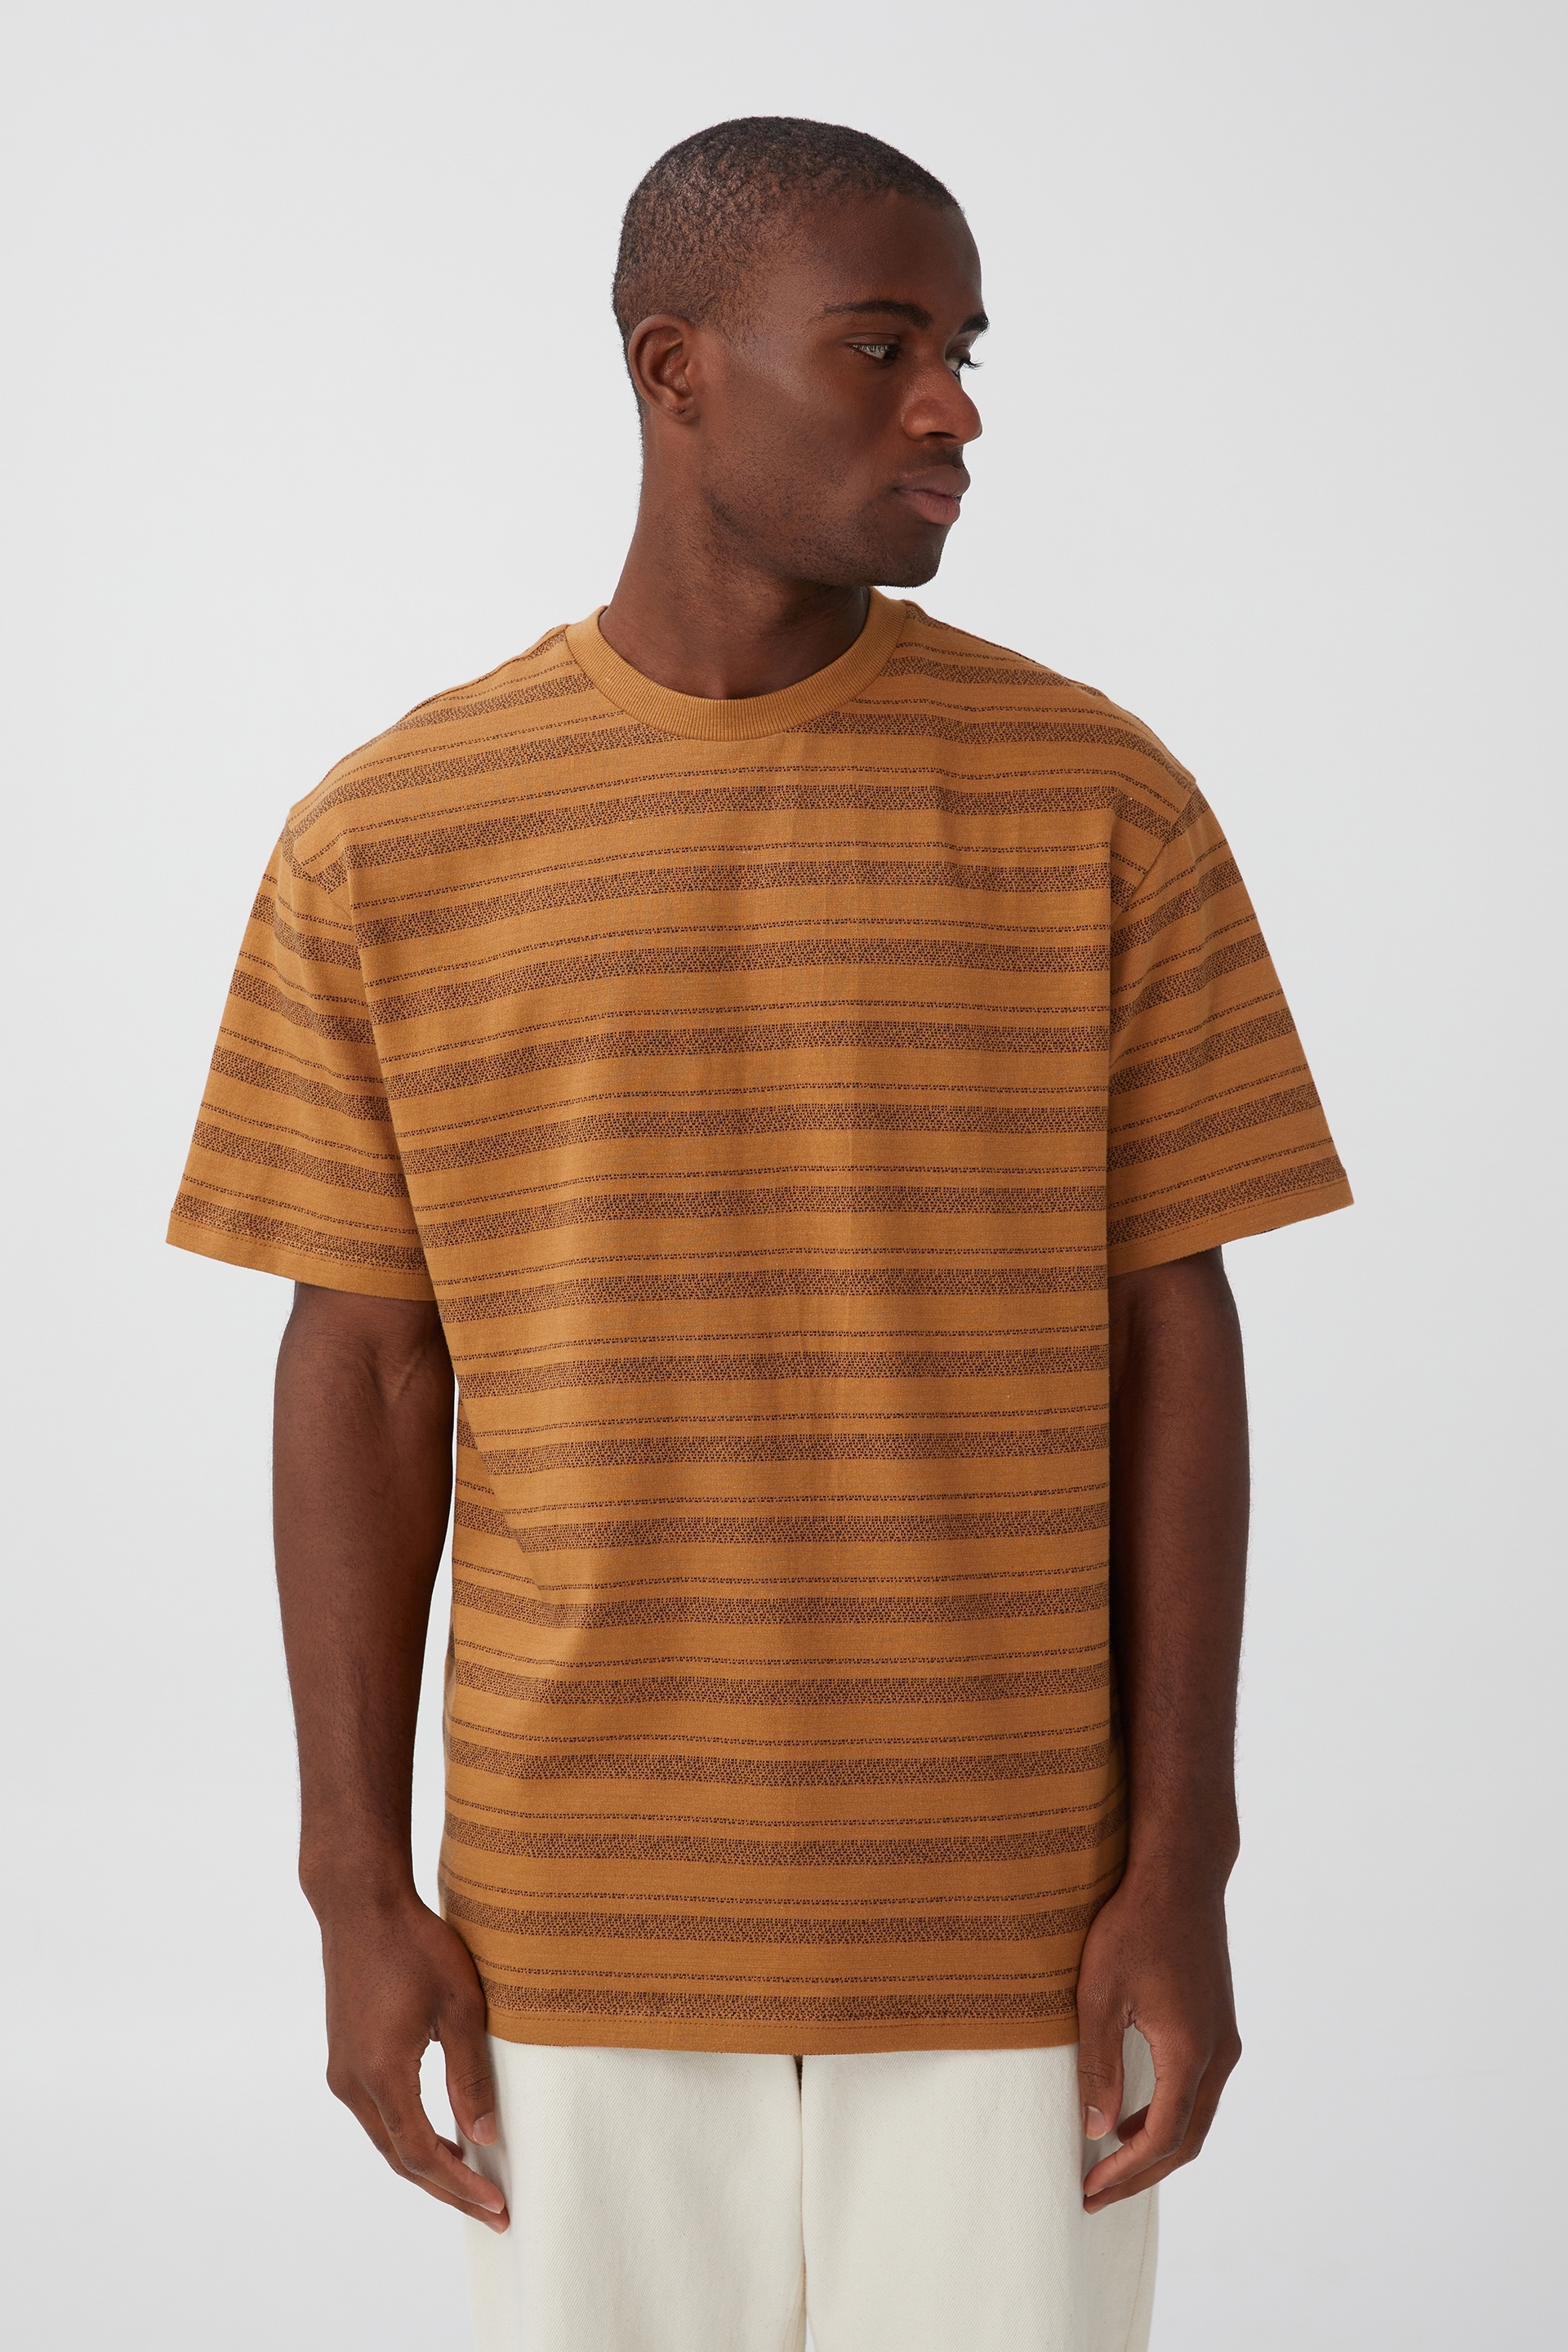 Cotton On Men - Loose Fit T-Shirt - Ginger textured stripe